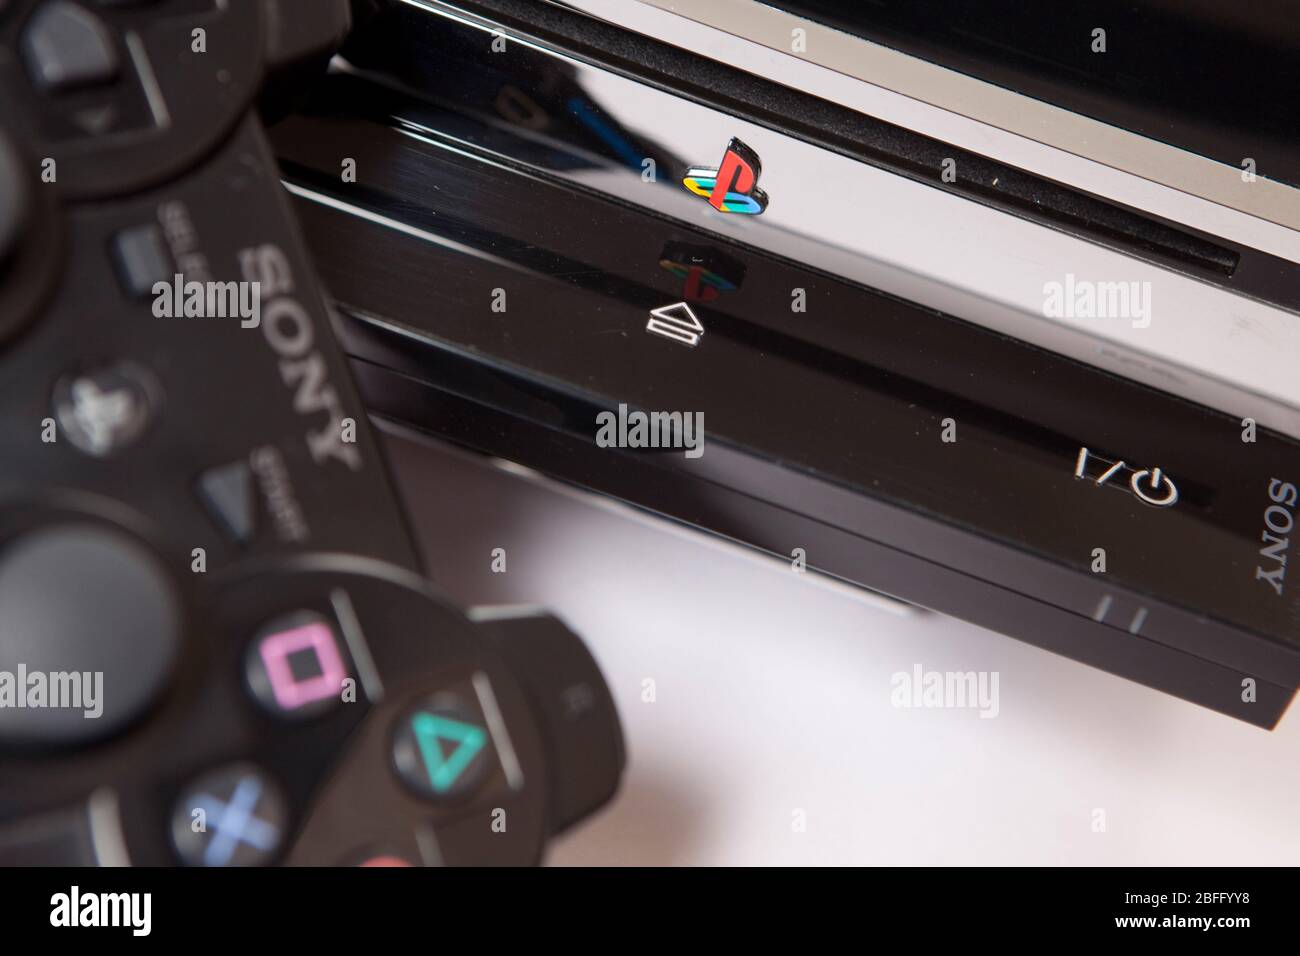 Illustrative image of the Sony Playstation 3. Stock Photo